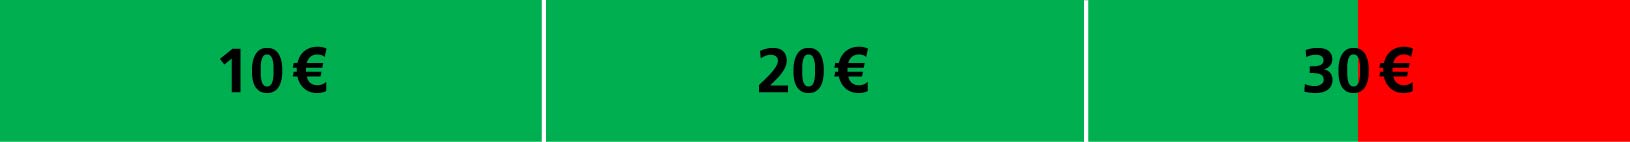 30er 25 Euro